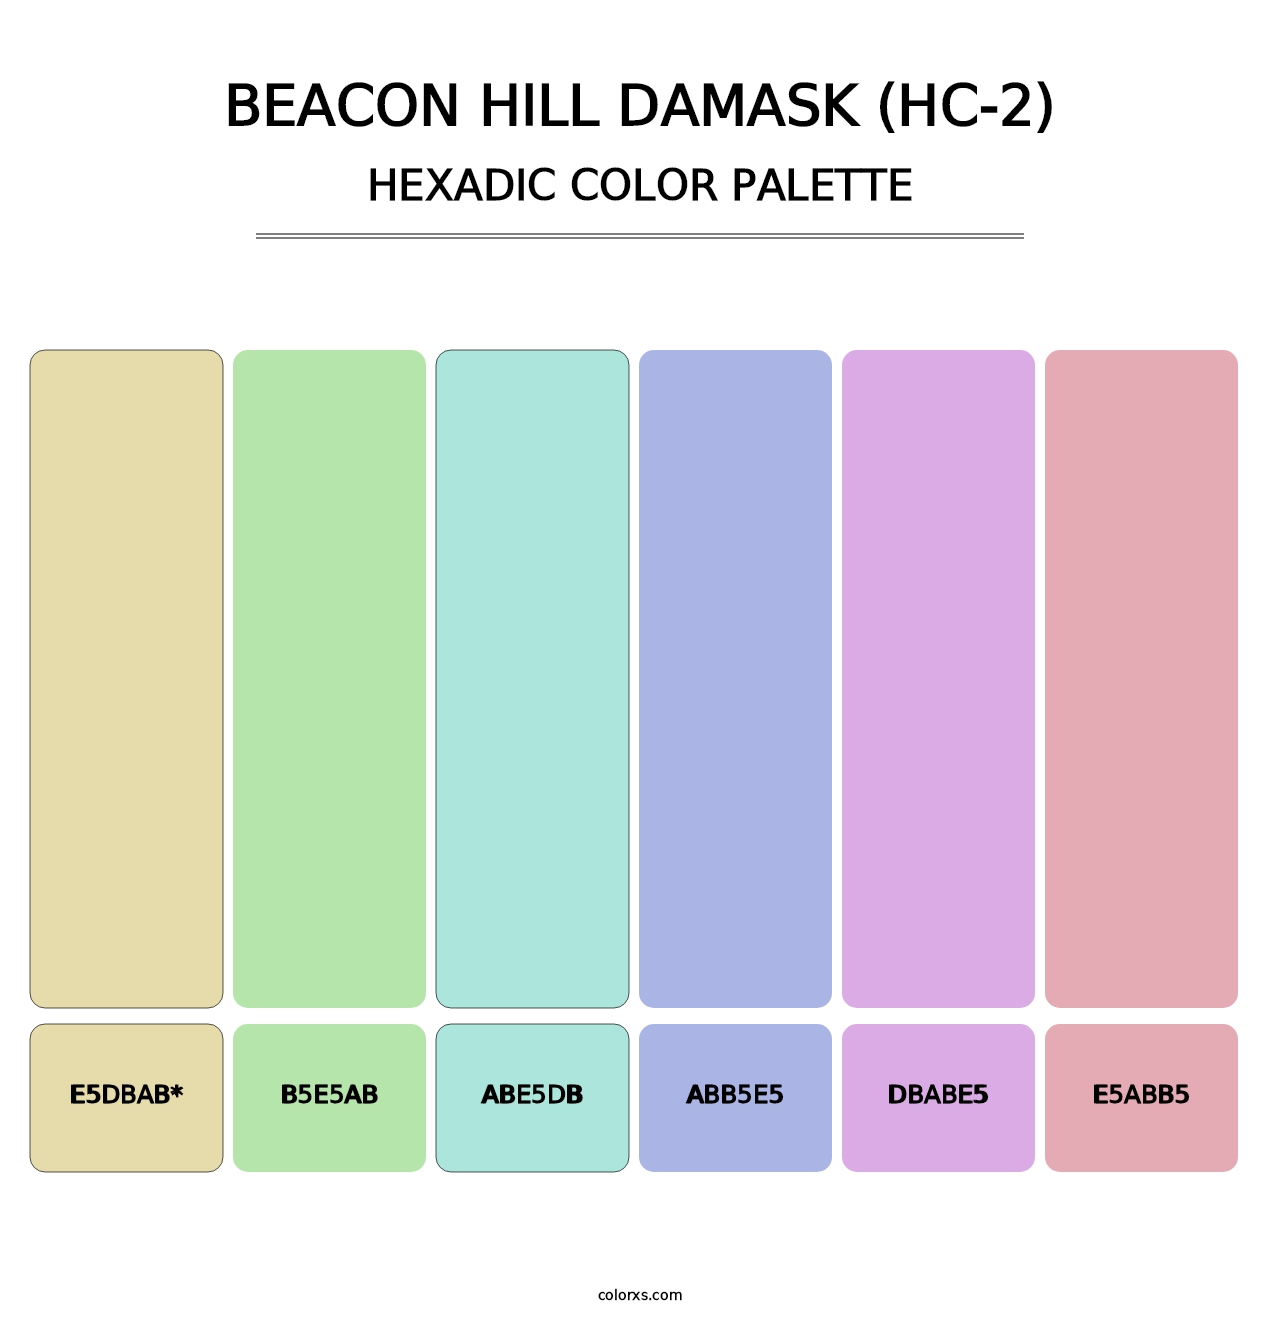 Beacon Hill Damask (HC-2) - Hexadic Color Palette